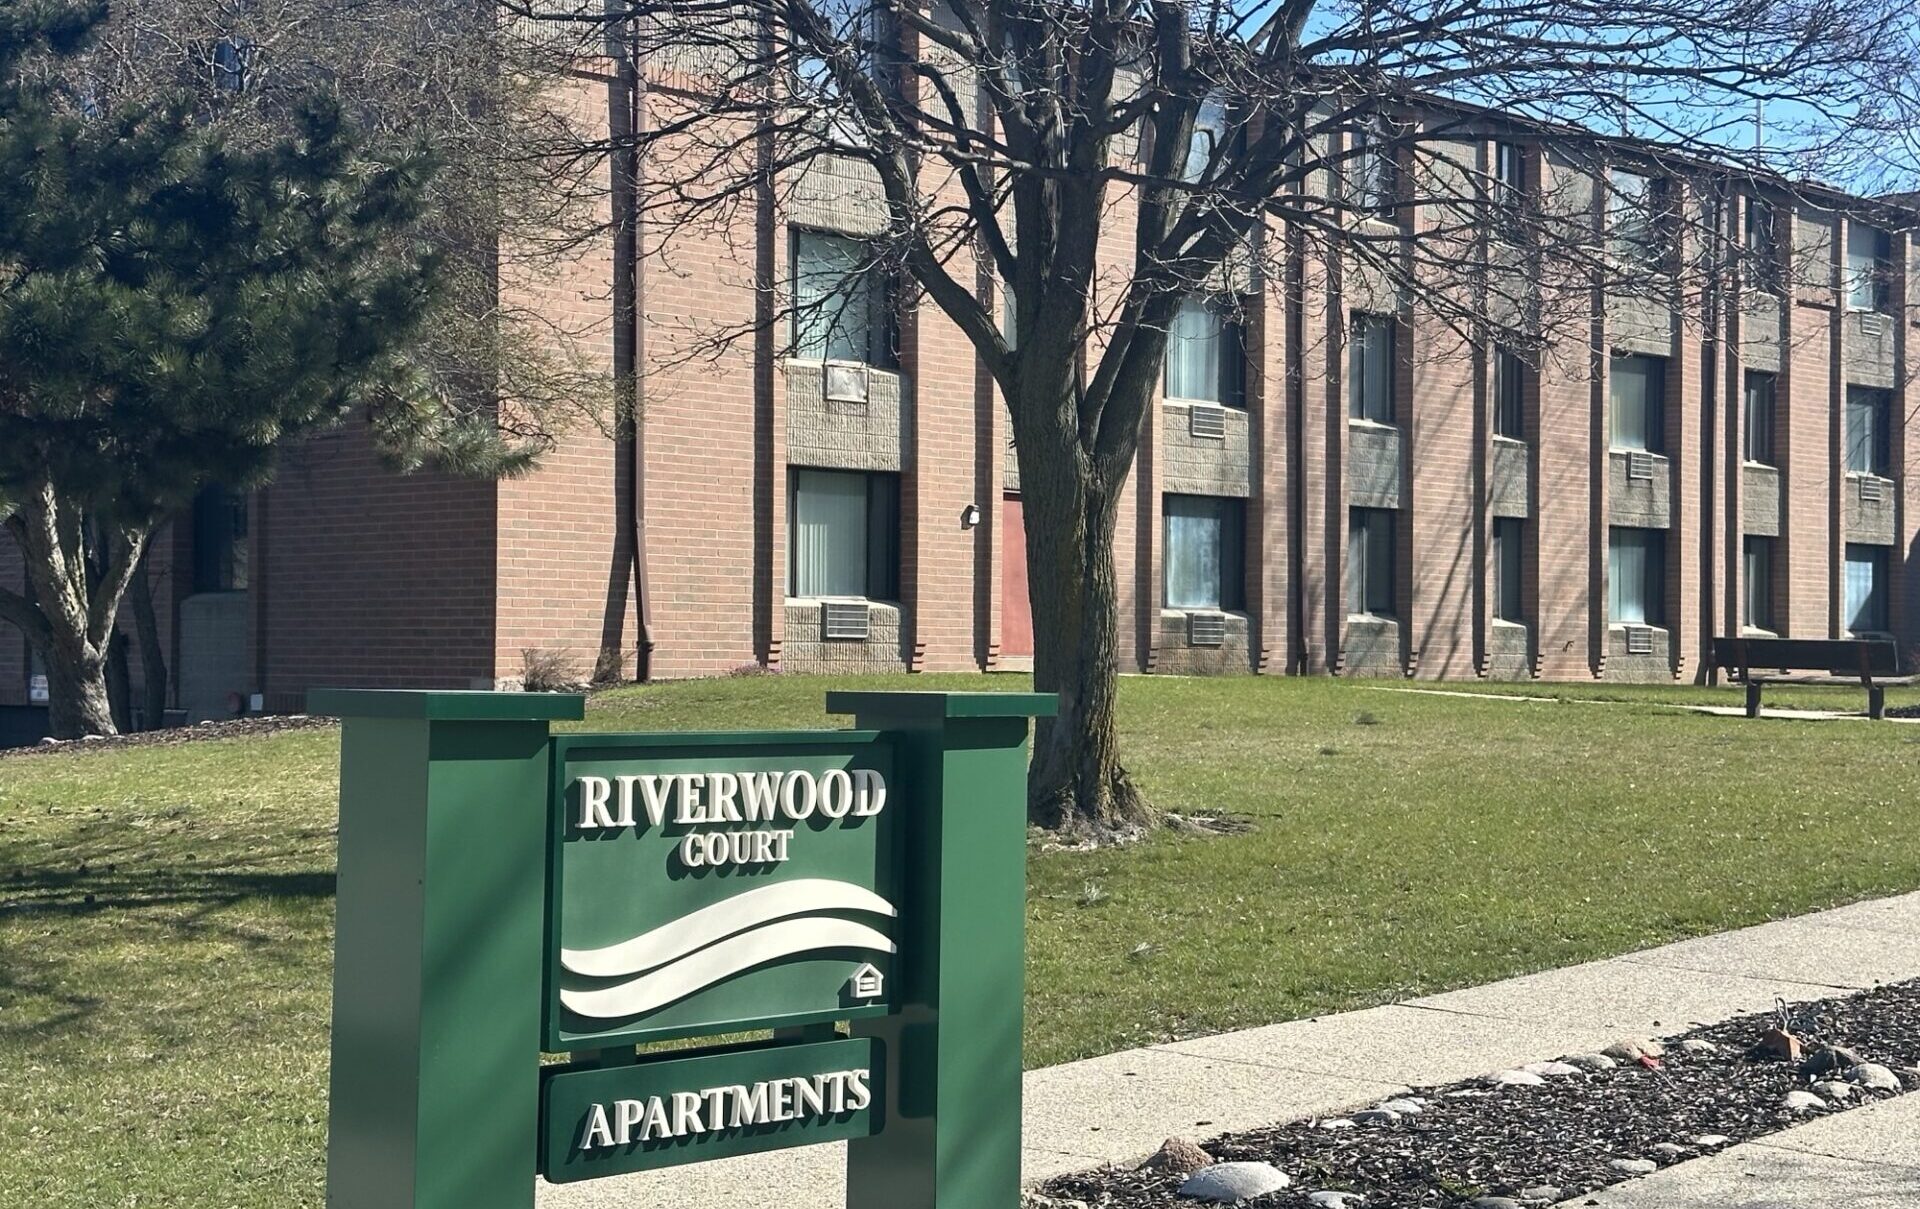 Riverwood Court